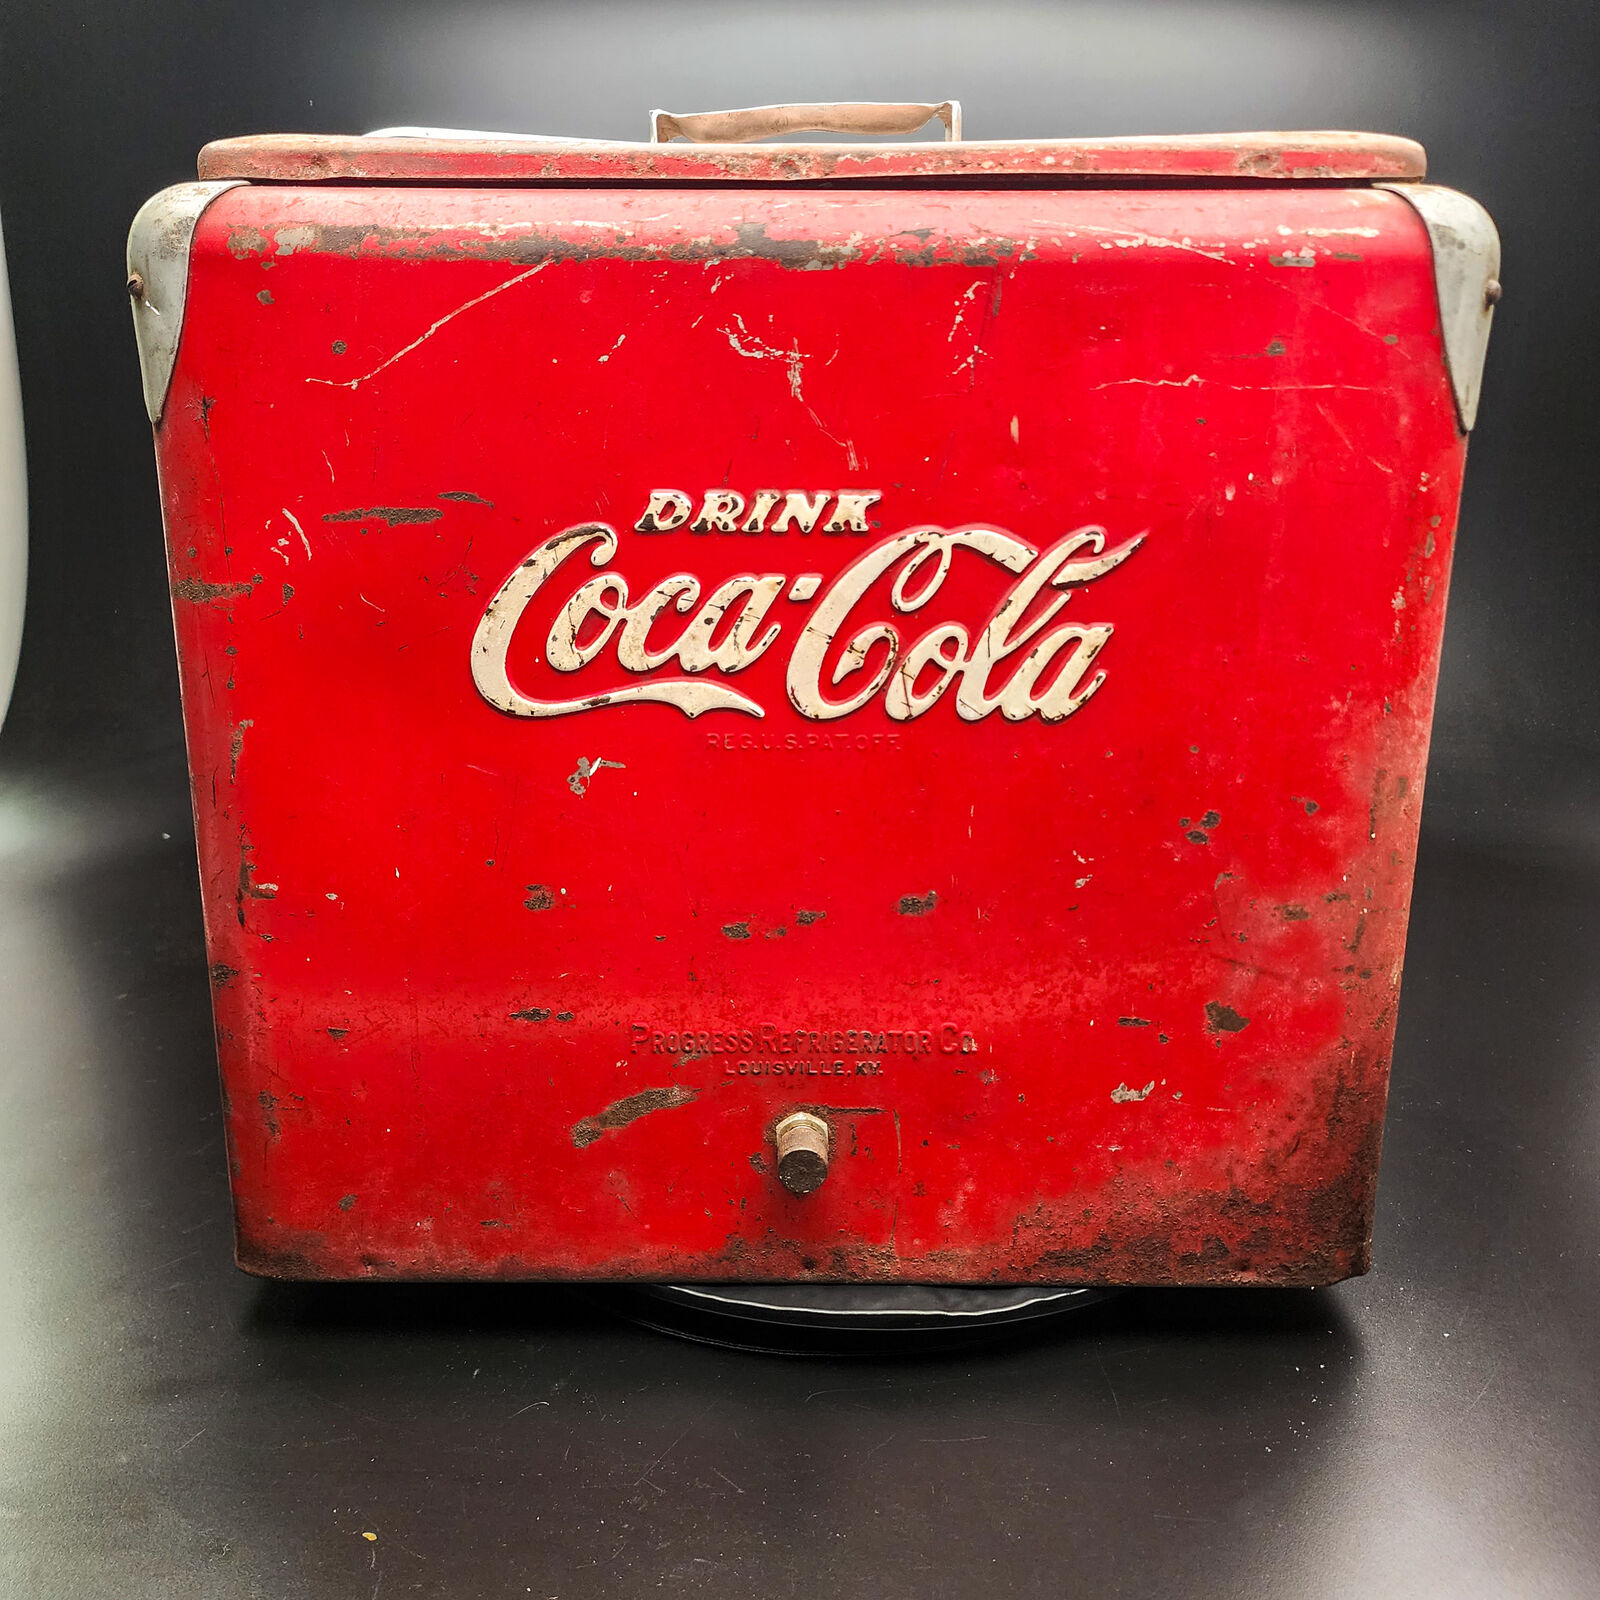 1950s COCA-COLA Cooler, Coke Ice Cooler-Action Mfg Co. “Drink Coca-Cola”